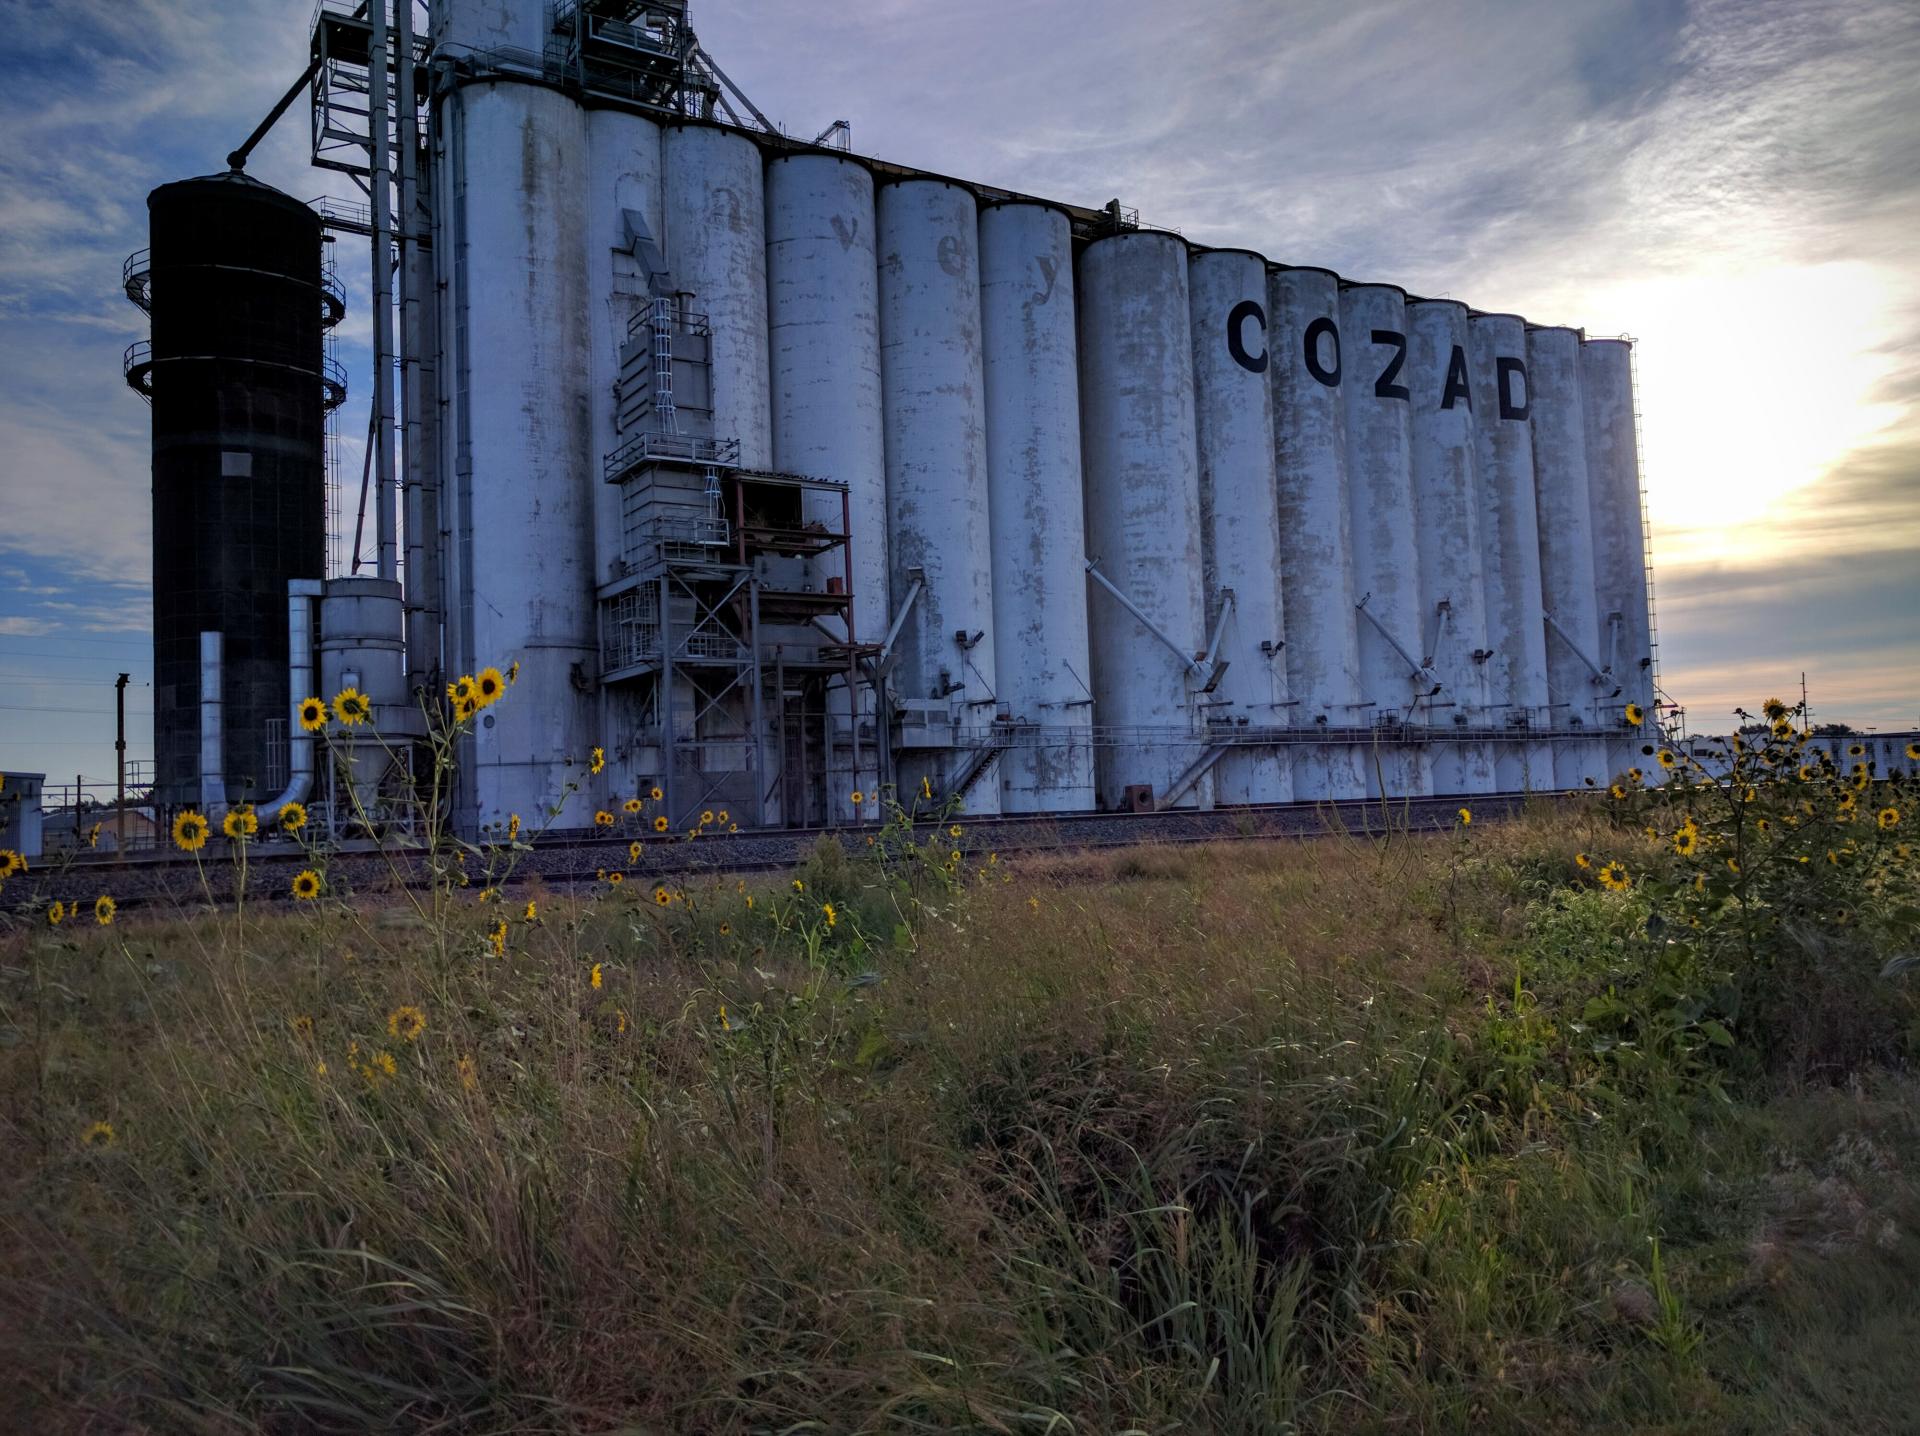 Cozad, Nebraska